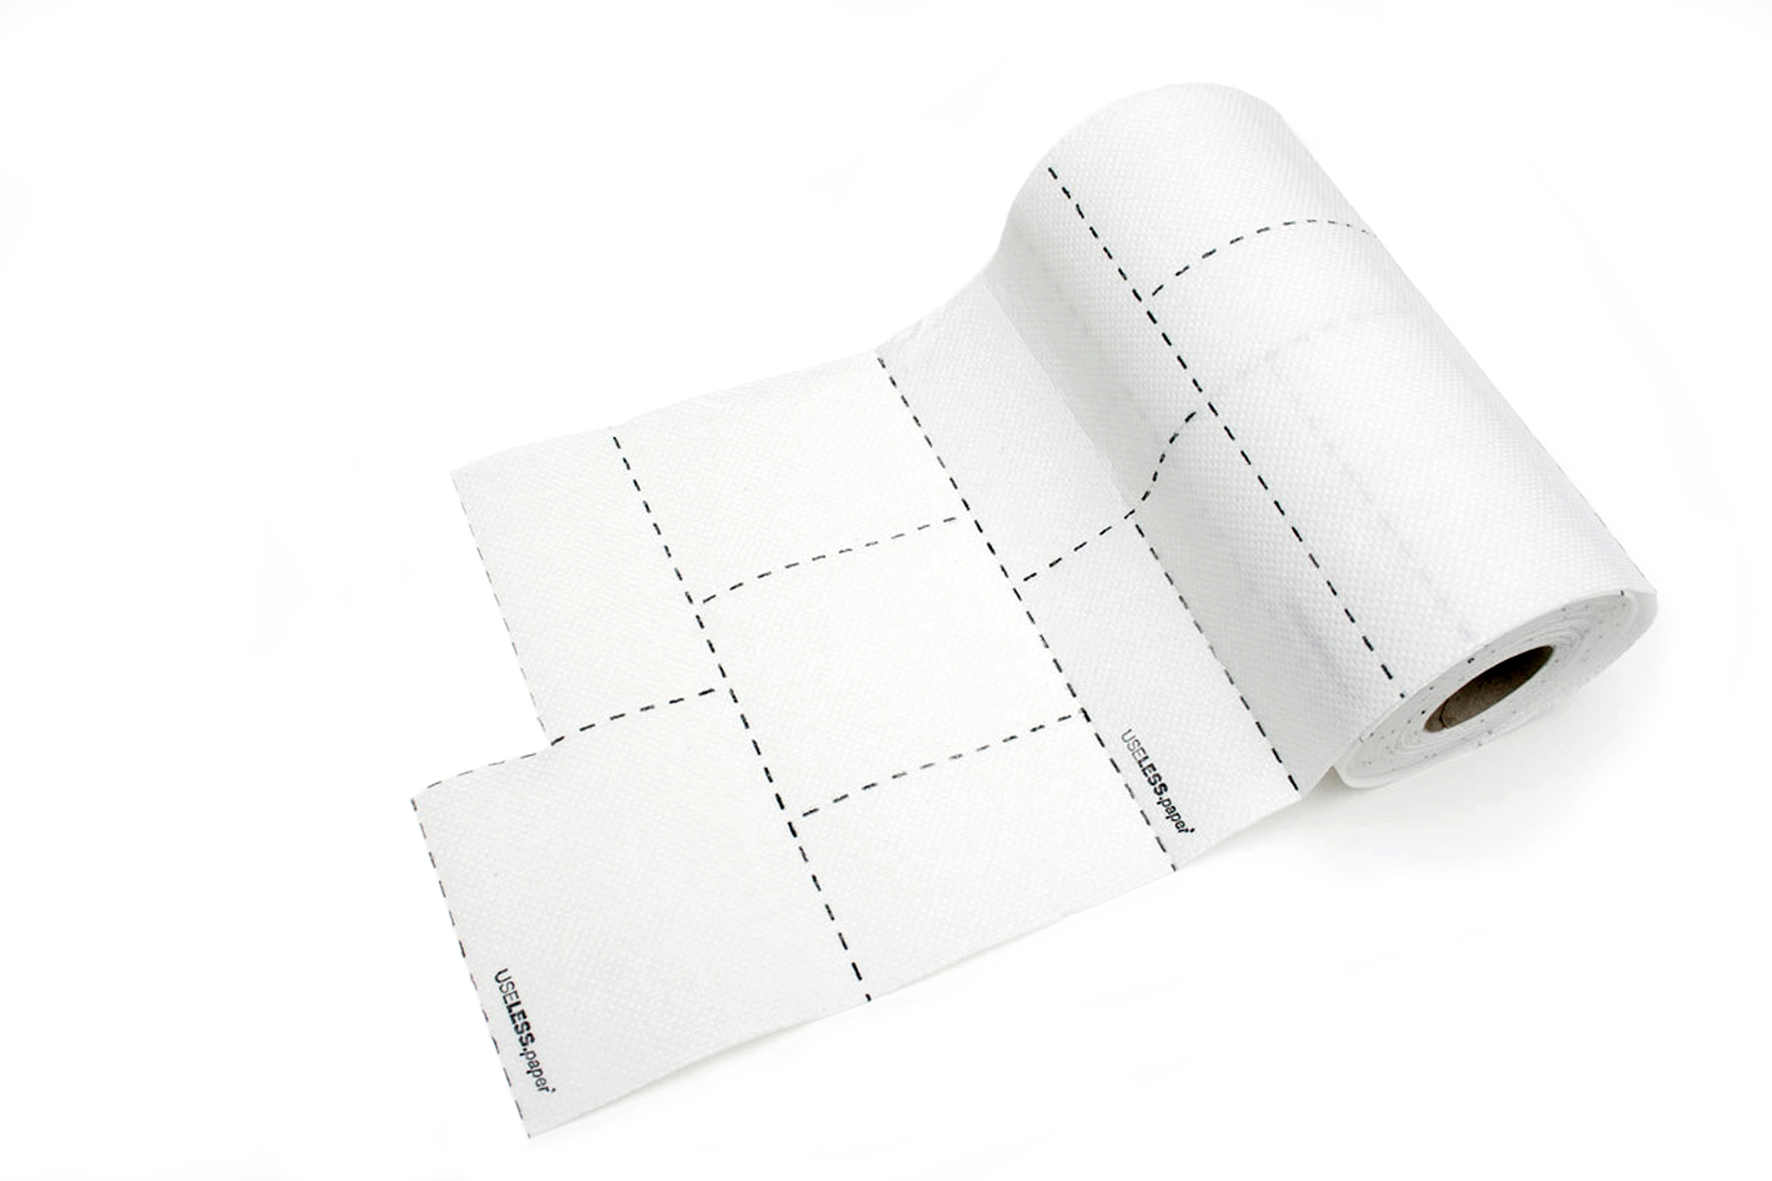 use less paper 2 - 10x15 300 dpi - nika rams.jpg